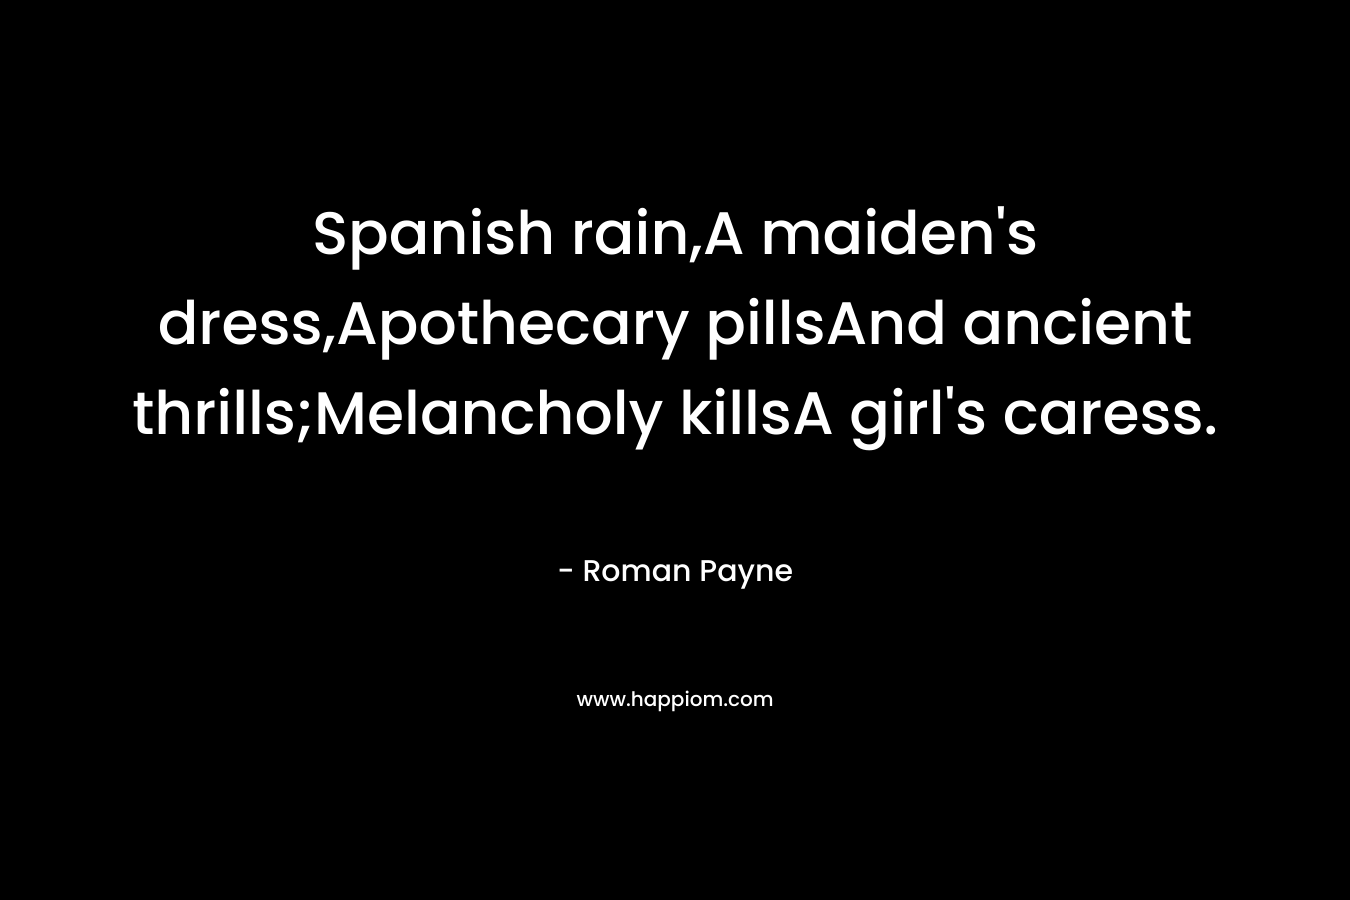 Spanish rain,A maiden’s dress,Apothecary pillsAnd ancient thrills;Melancholy killsA girl’s caress. – Roman Payne